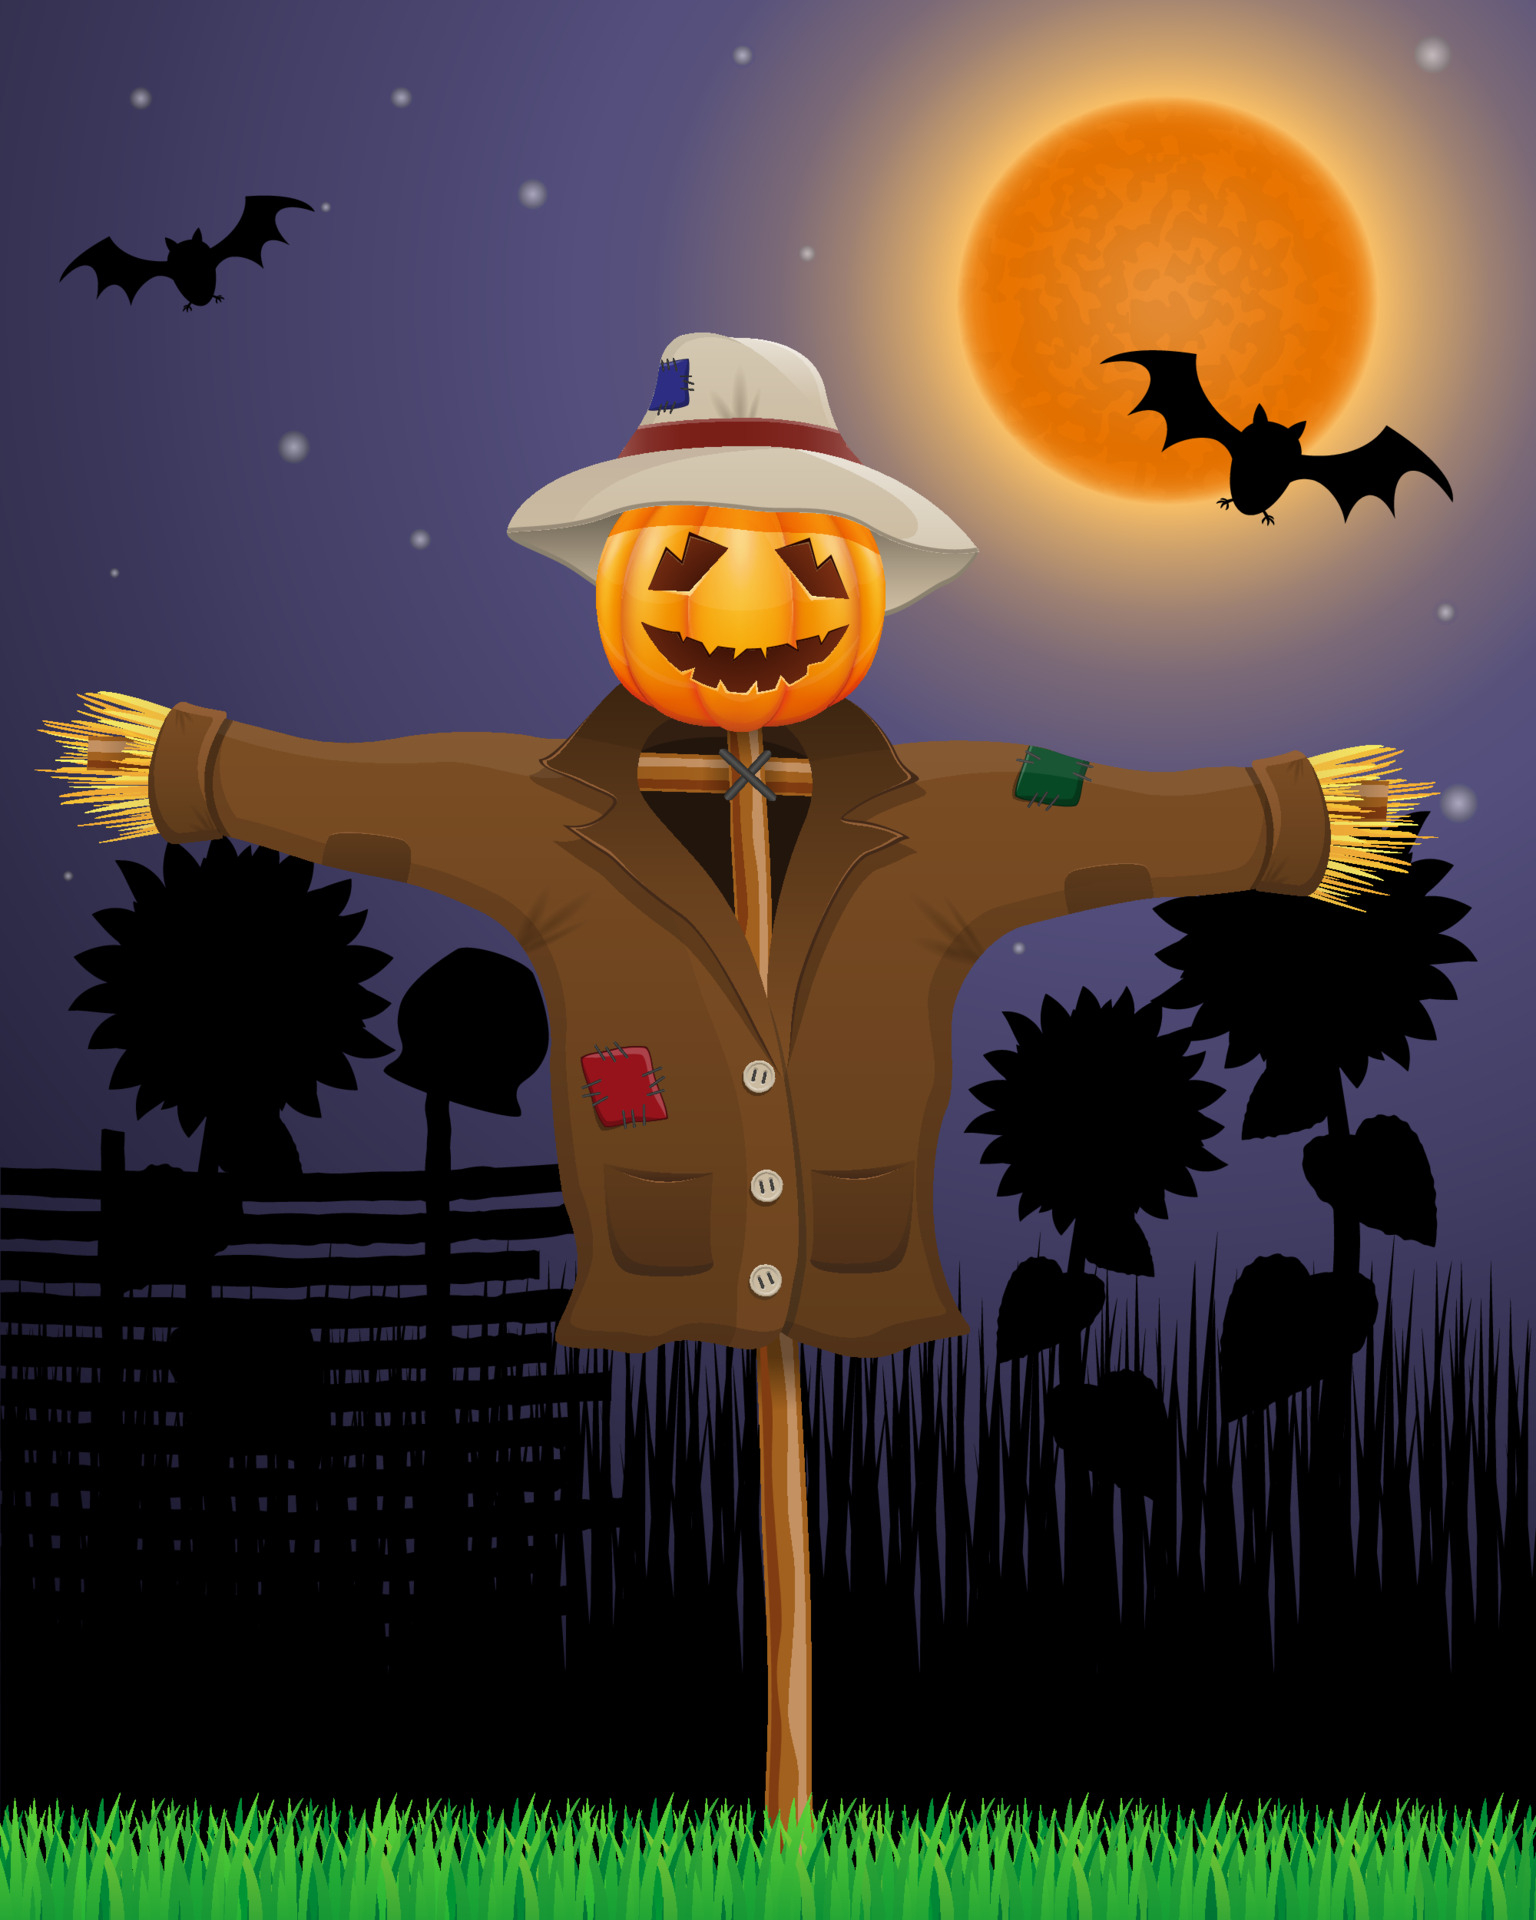 1536x1920 garden scarecrow with a pumpkin head for holidays halloween vector illustration 3775608 Vector Art